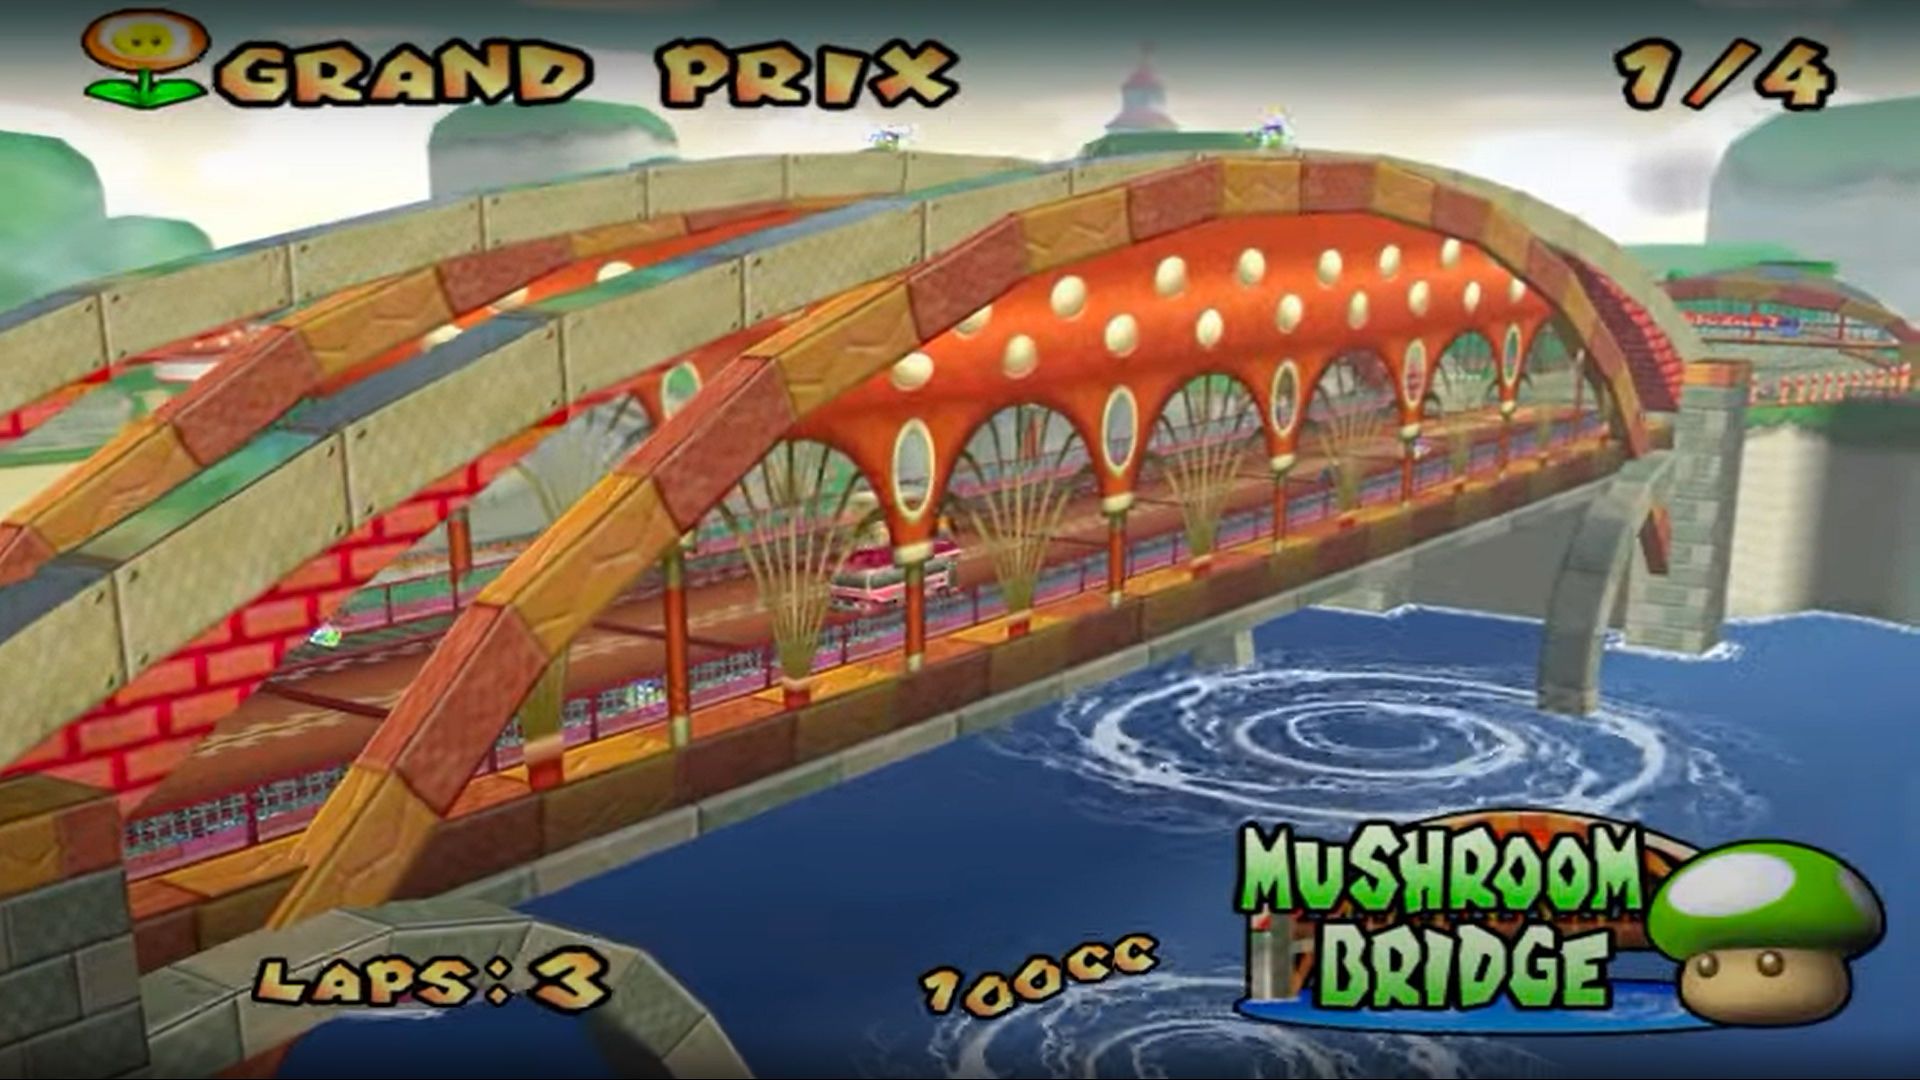 Mario Kart Double Dash - Mushroom Bridge